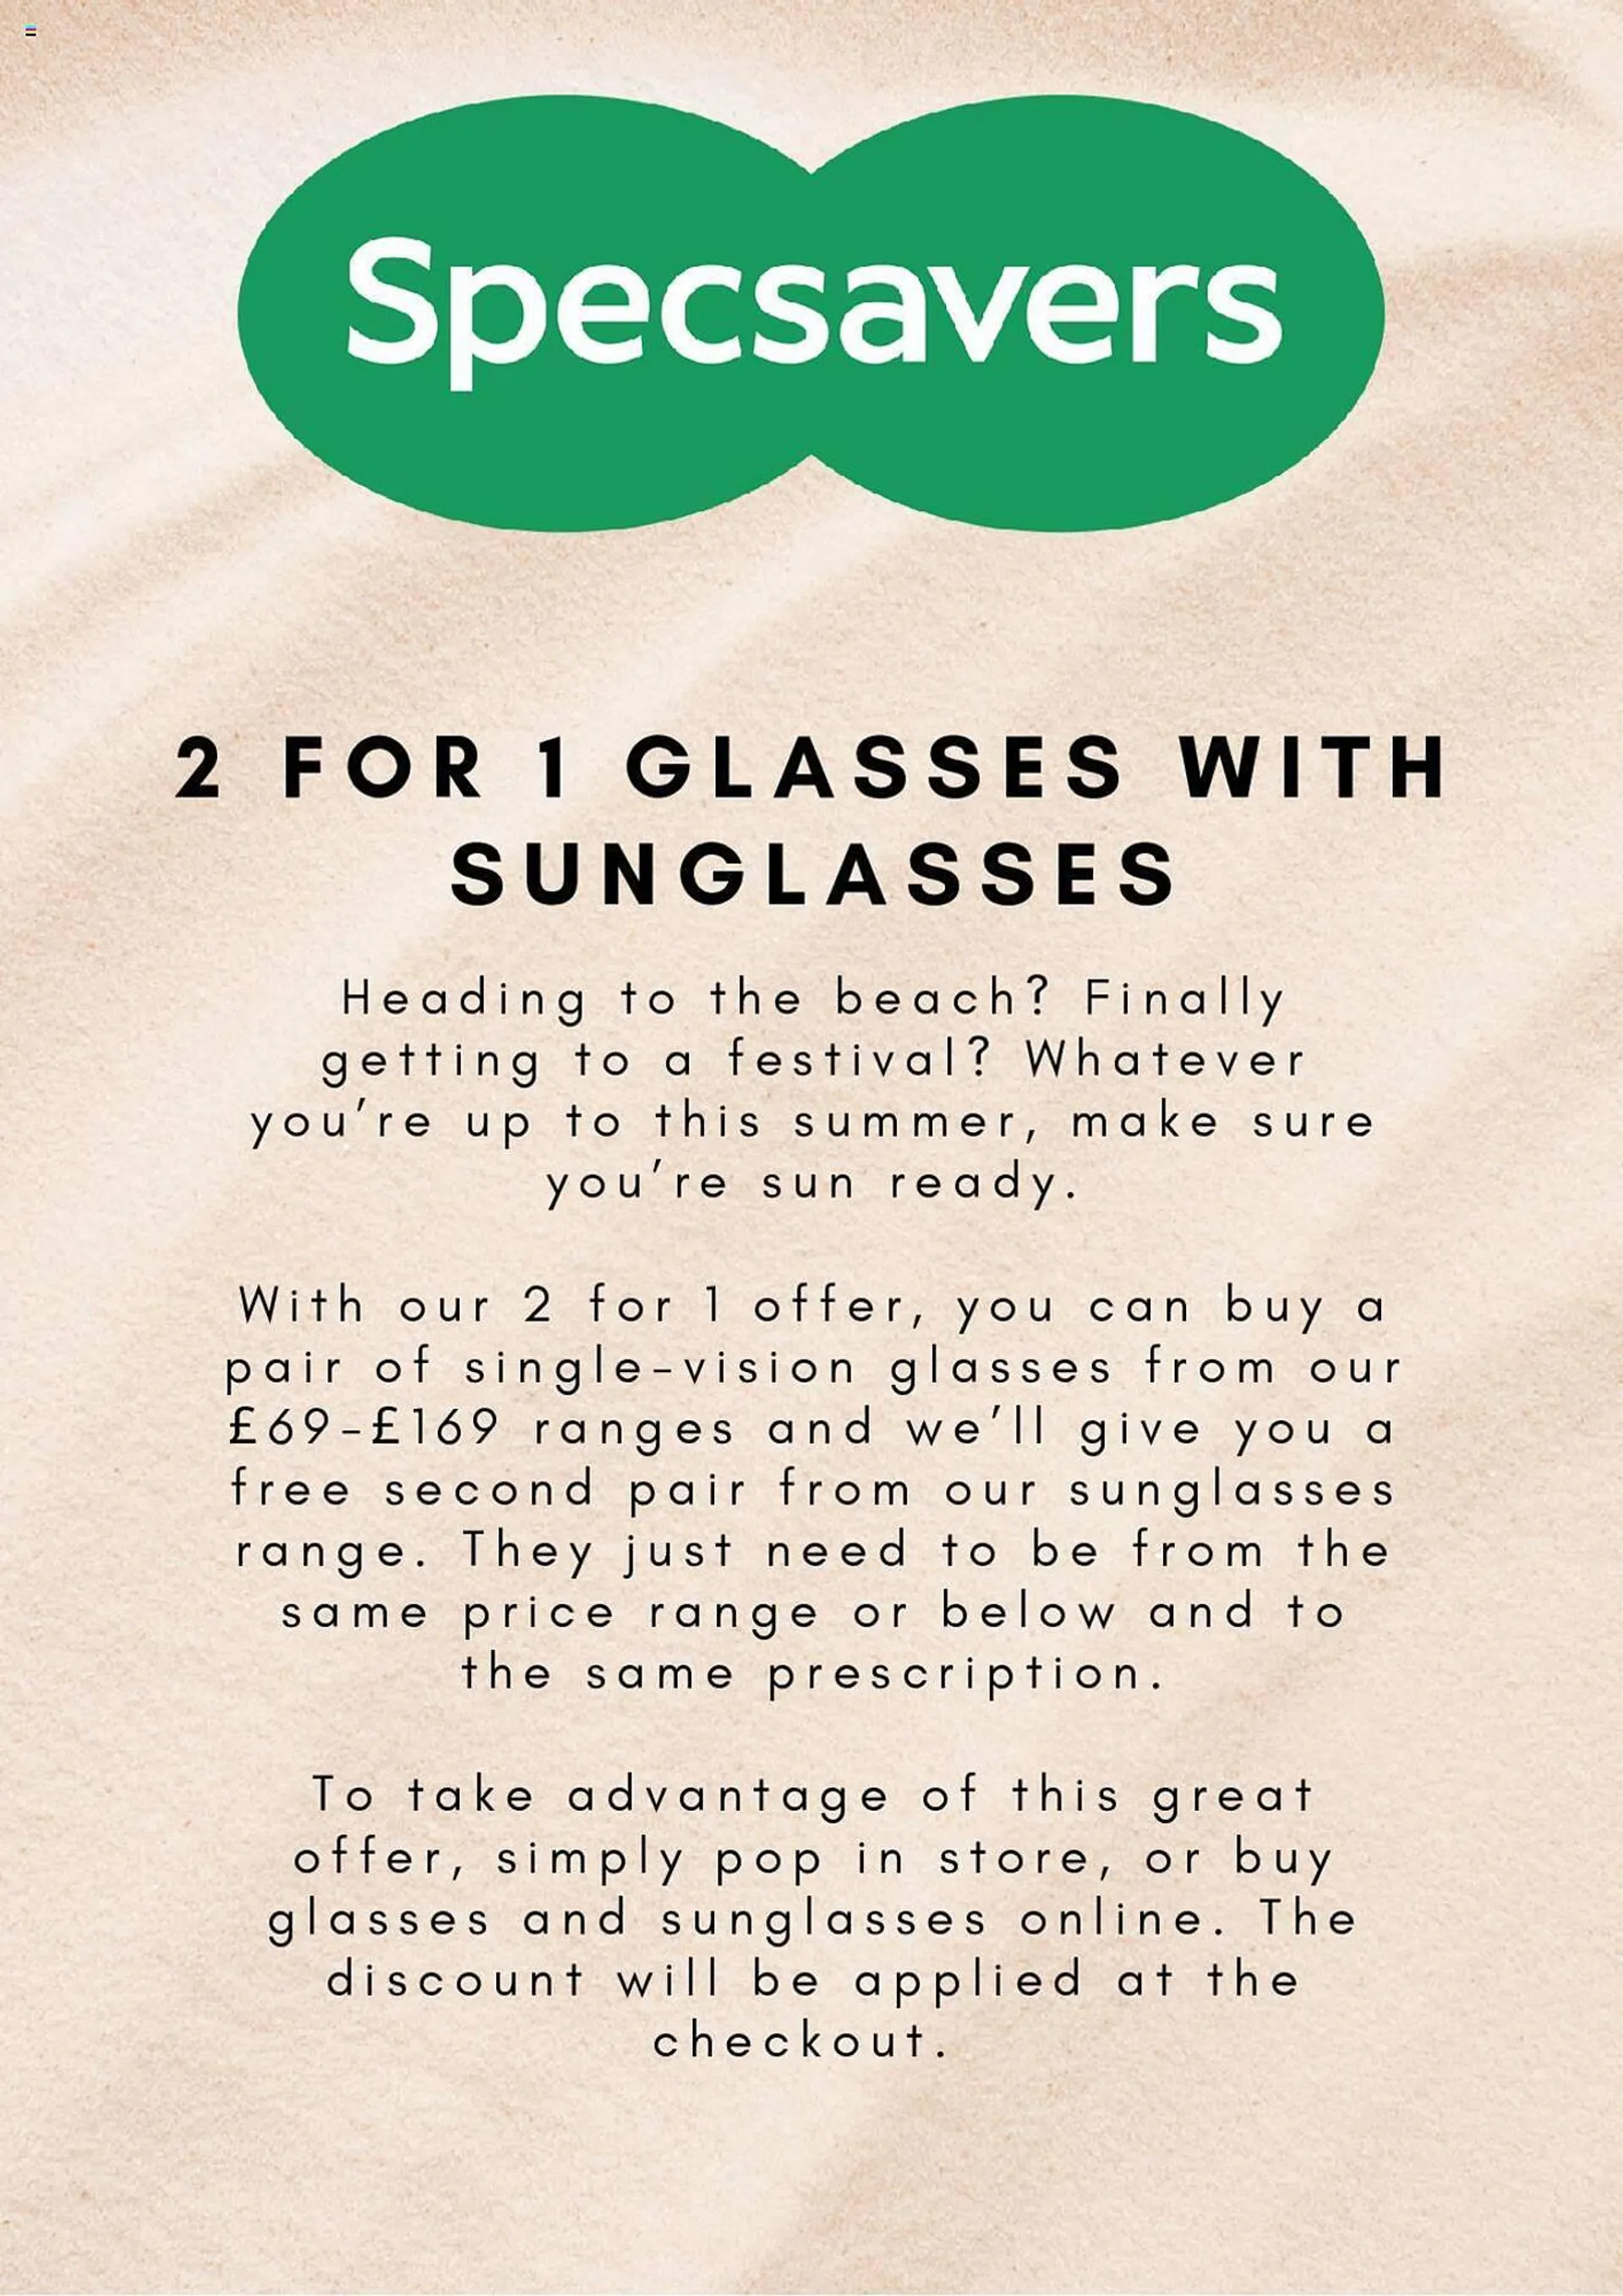 Specsavers leaflet - 2